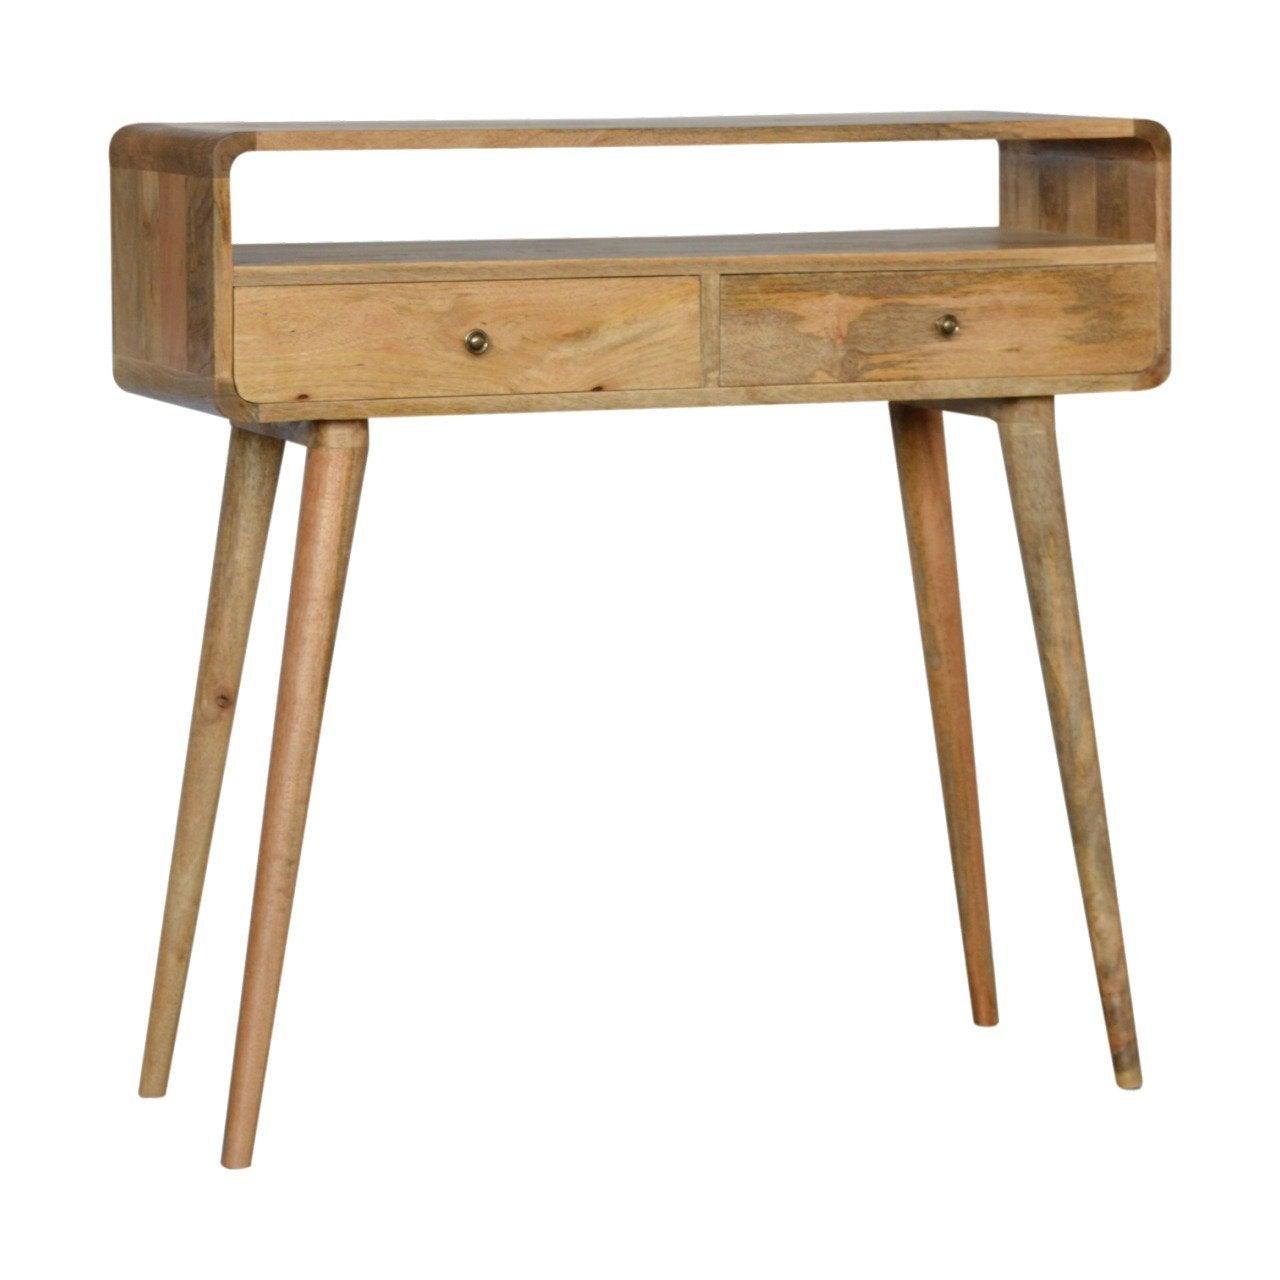 Curved oak-ish console table - crimblefest furniture - image 3